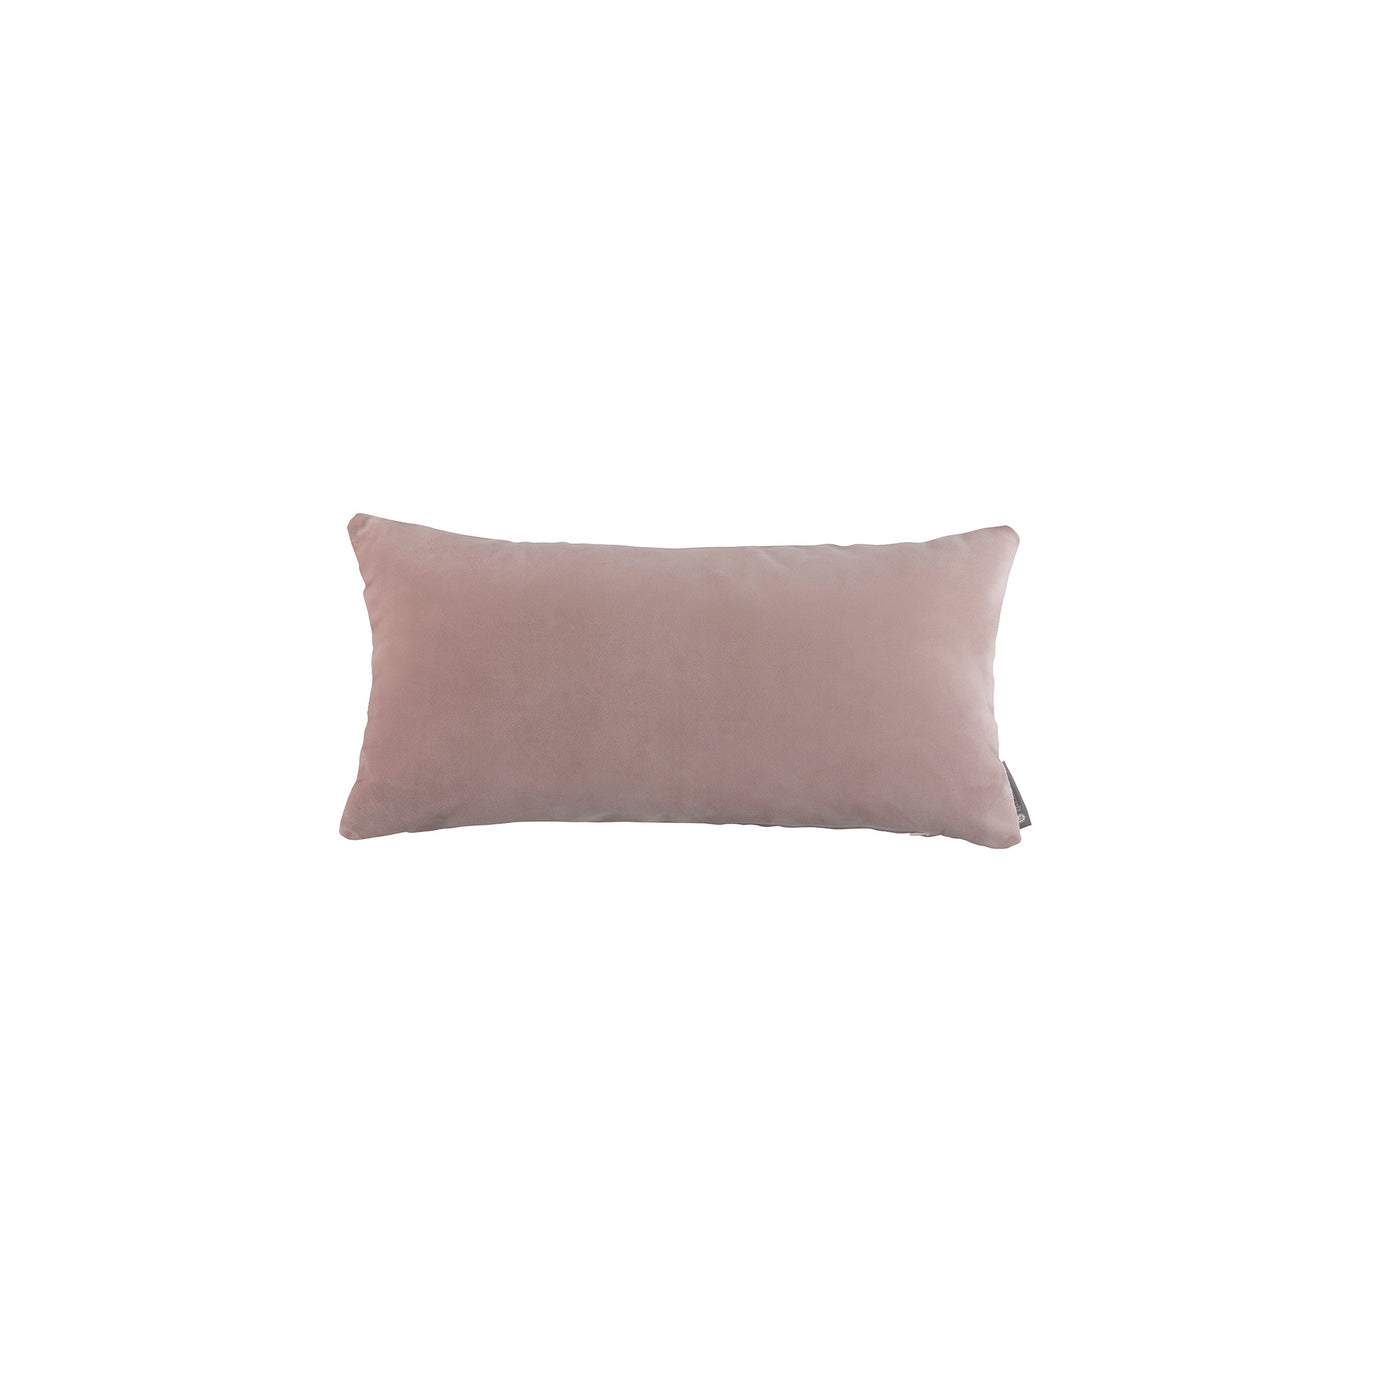 Vivid Cameo Small Rectangle Pillow (12x24)